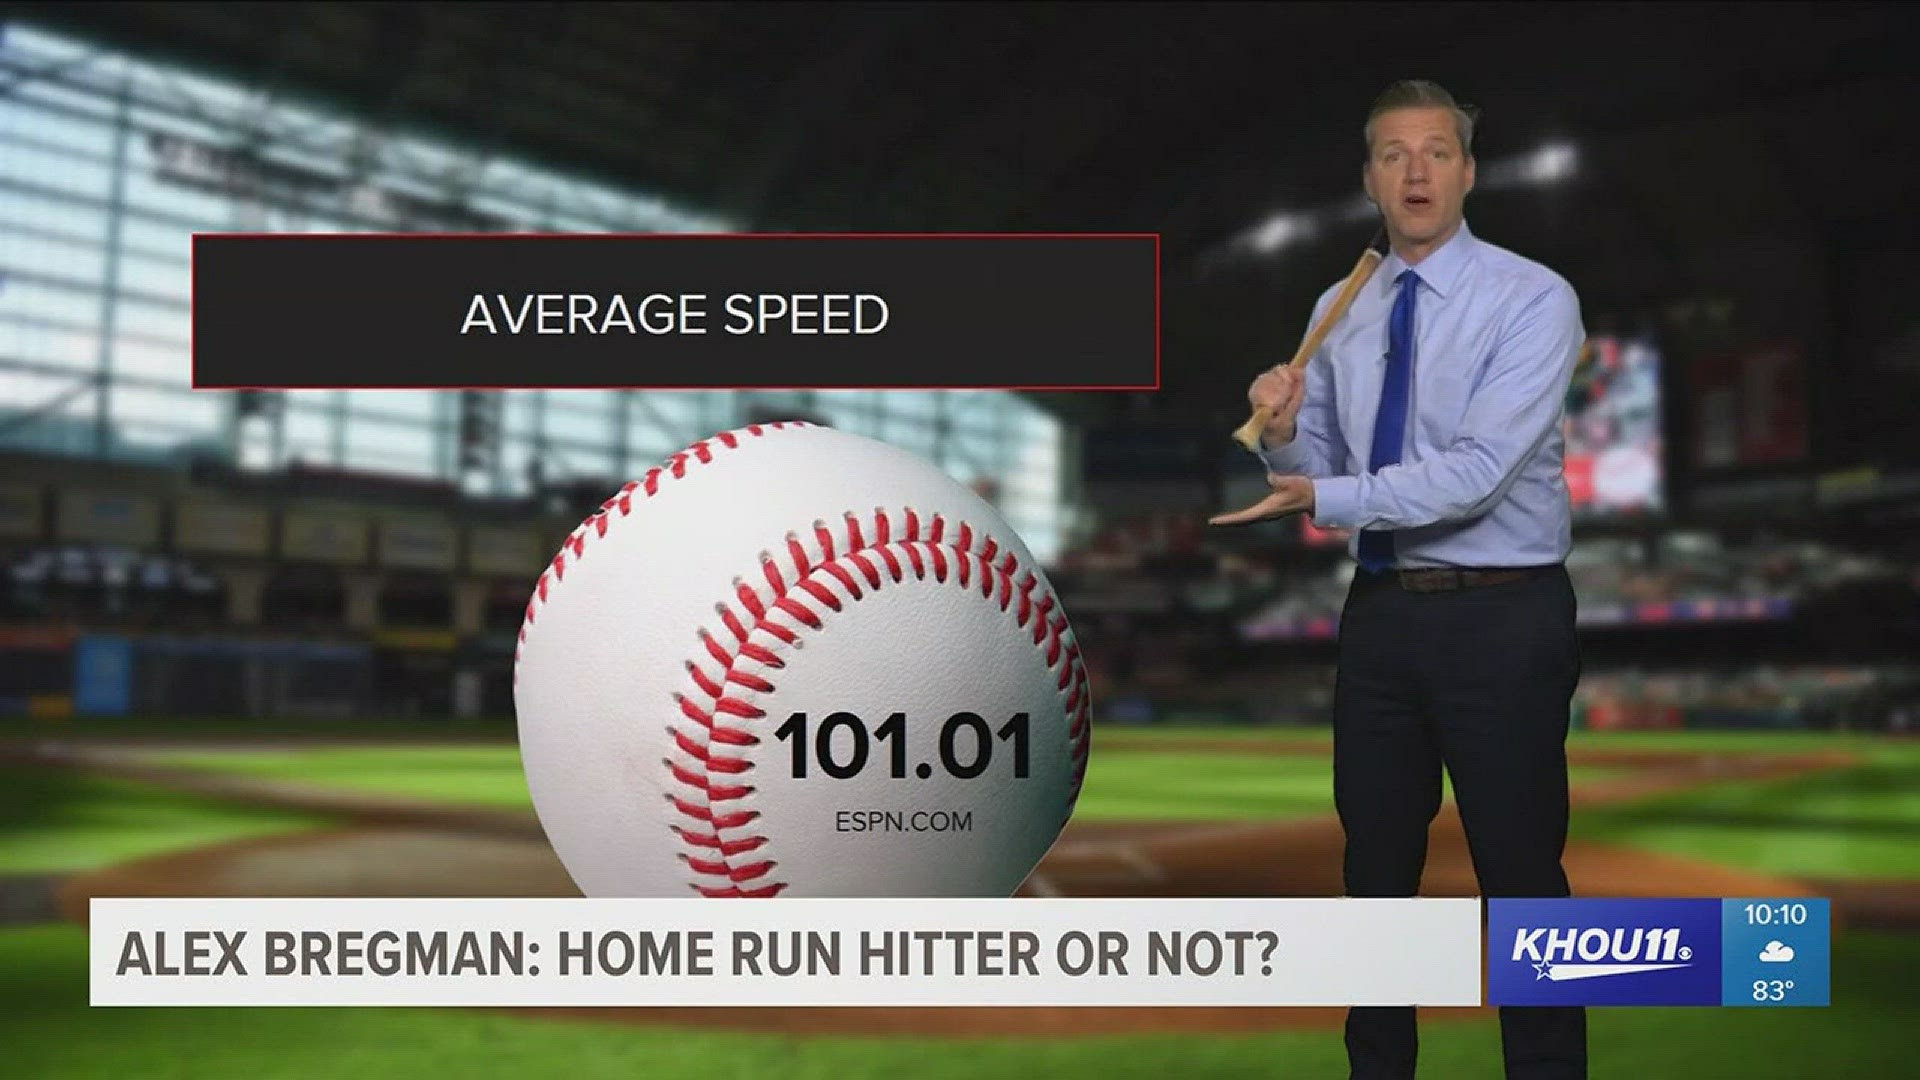 KHOU 11 Jason Bristol says Alex Bregman is many things, but he's not a true home run hitter.